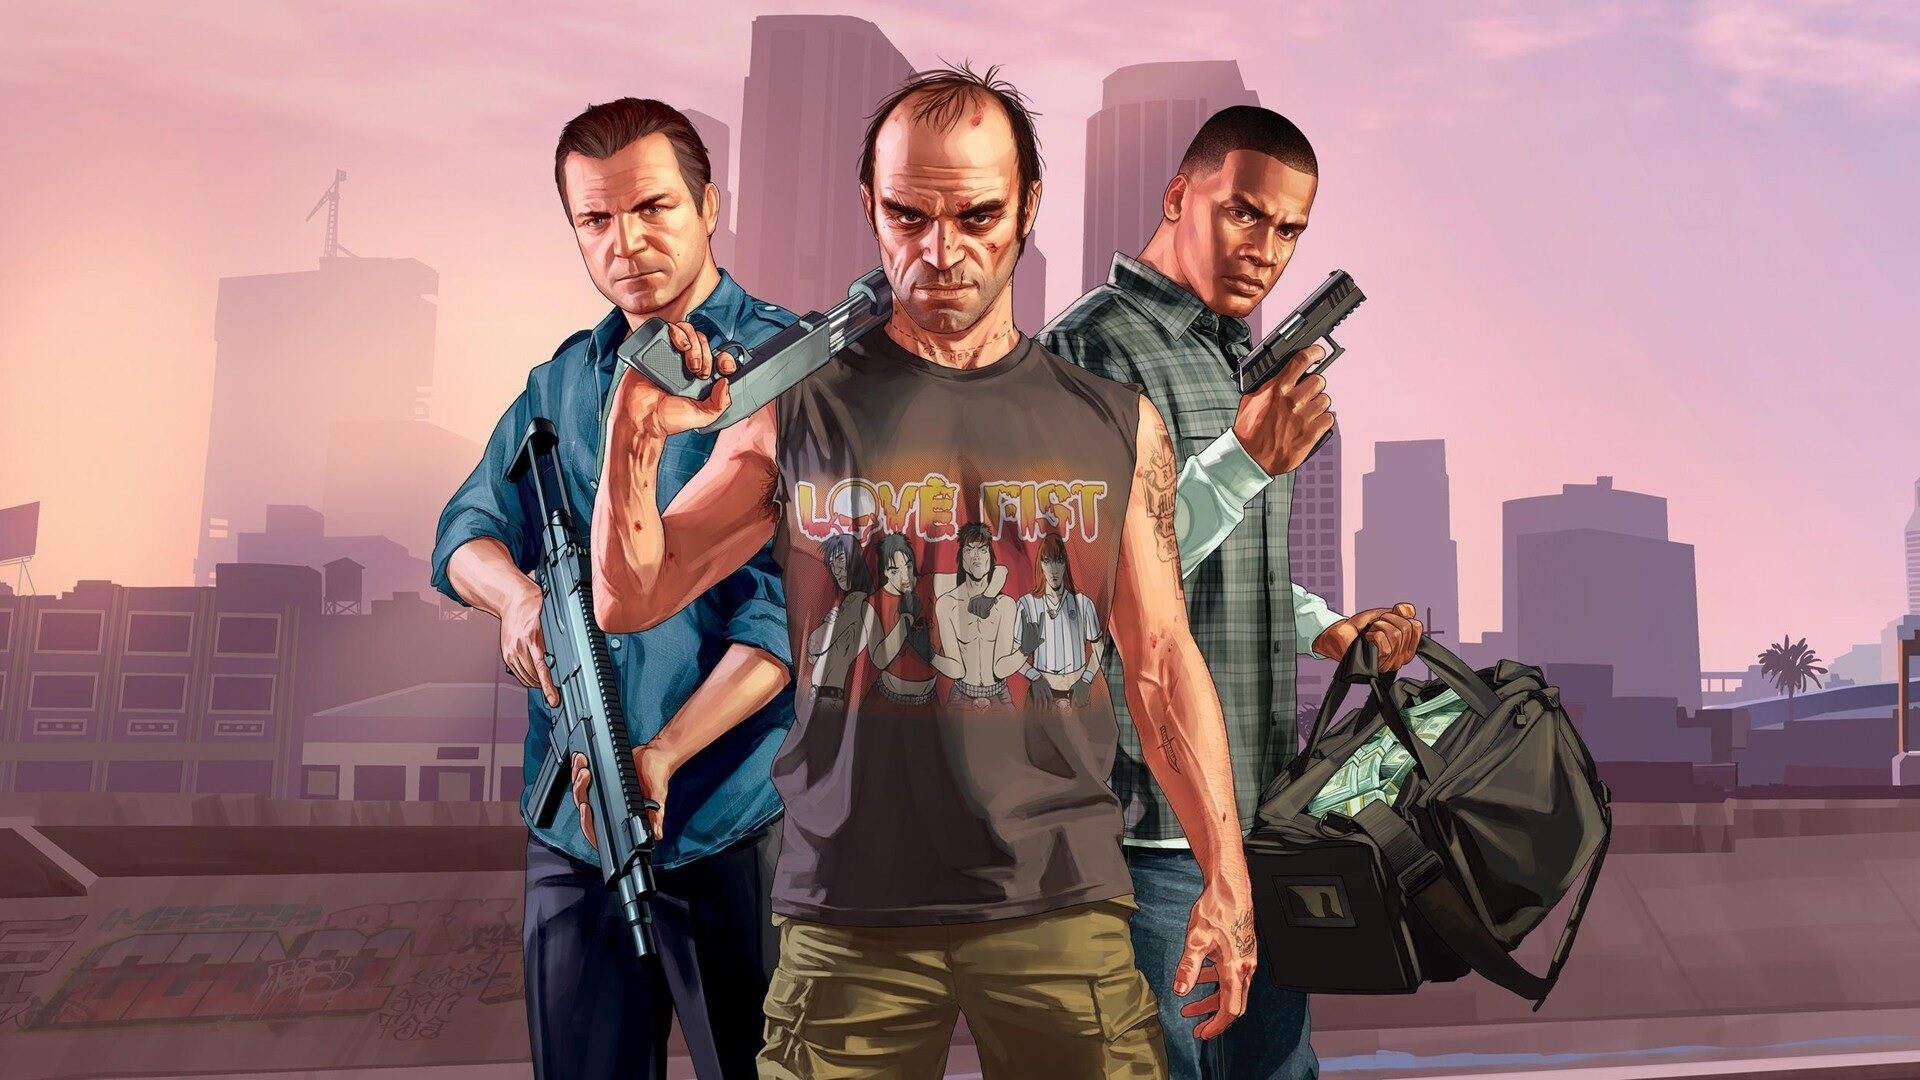 GTA 5 PC Grand Theft Auto V Premium Online Edition ROCKSTAR KEY only Global  710425414534